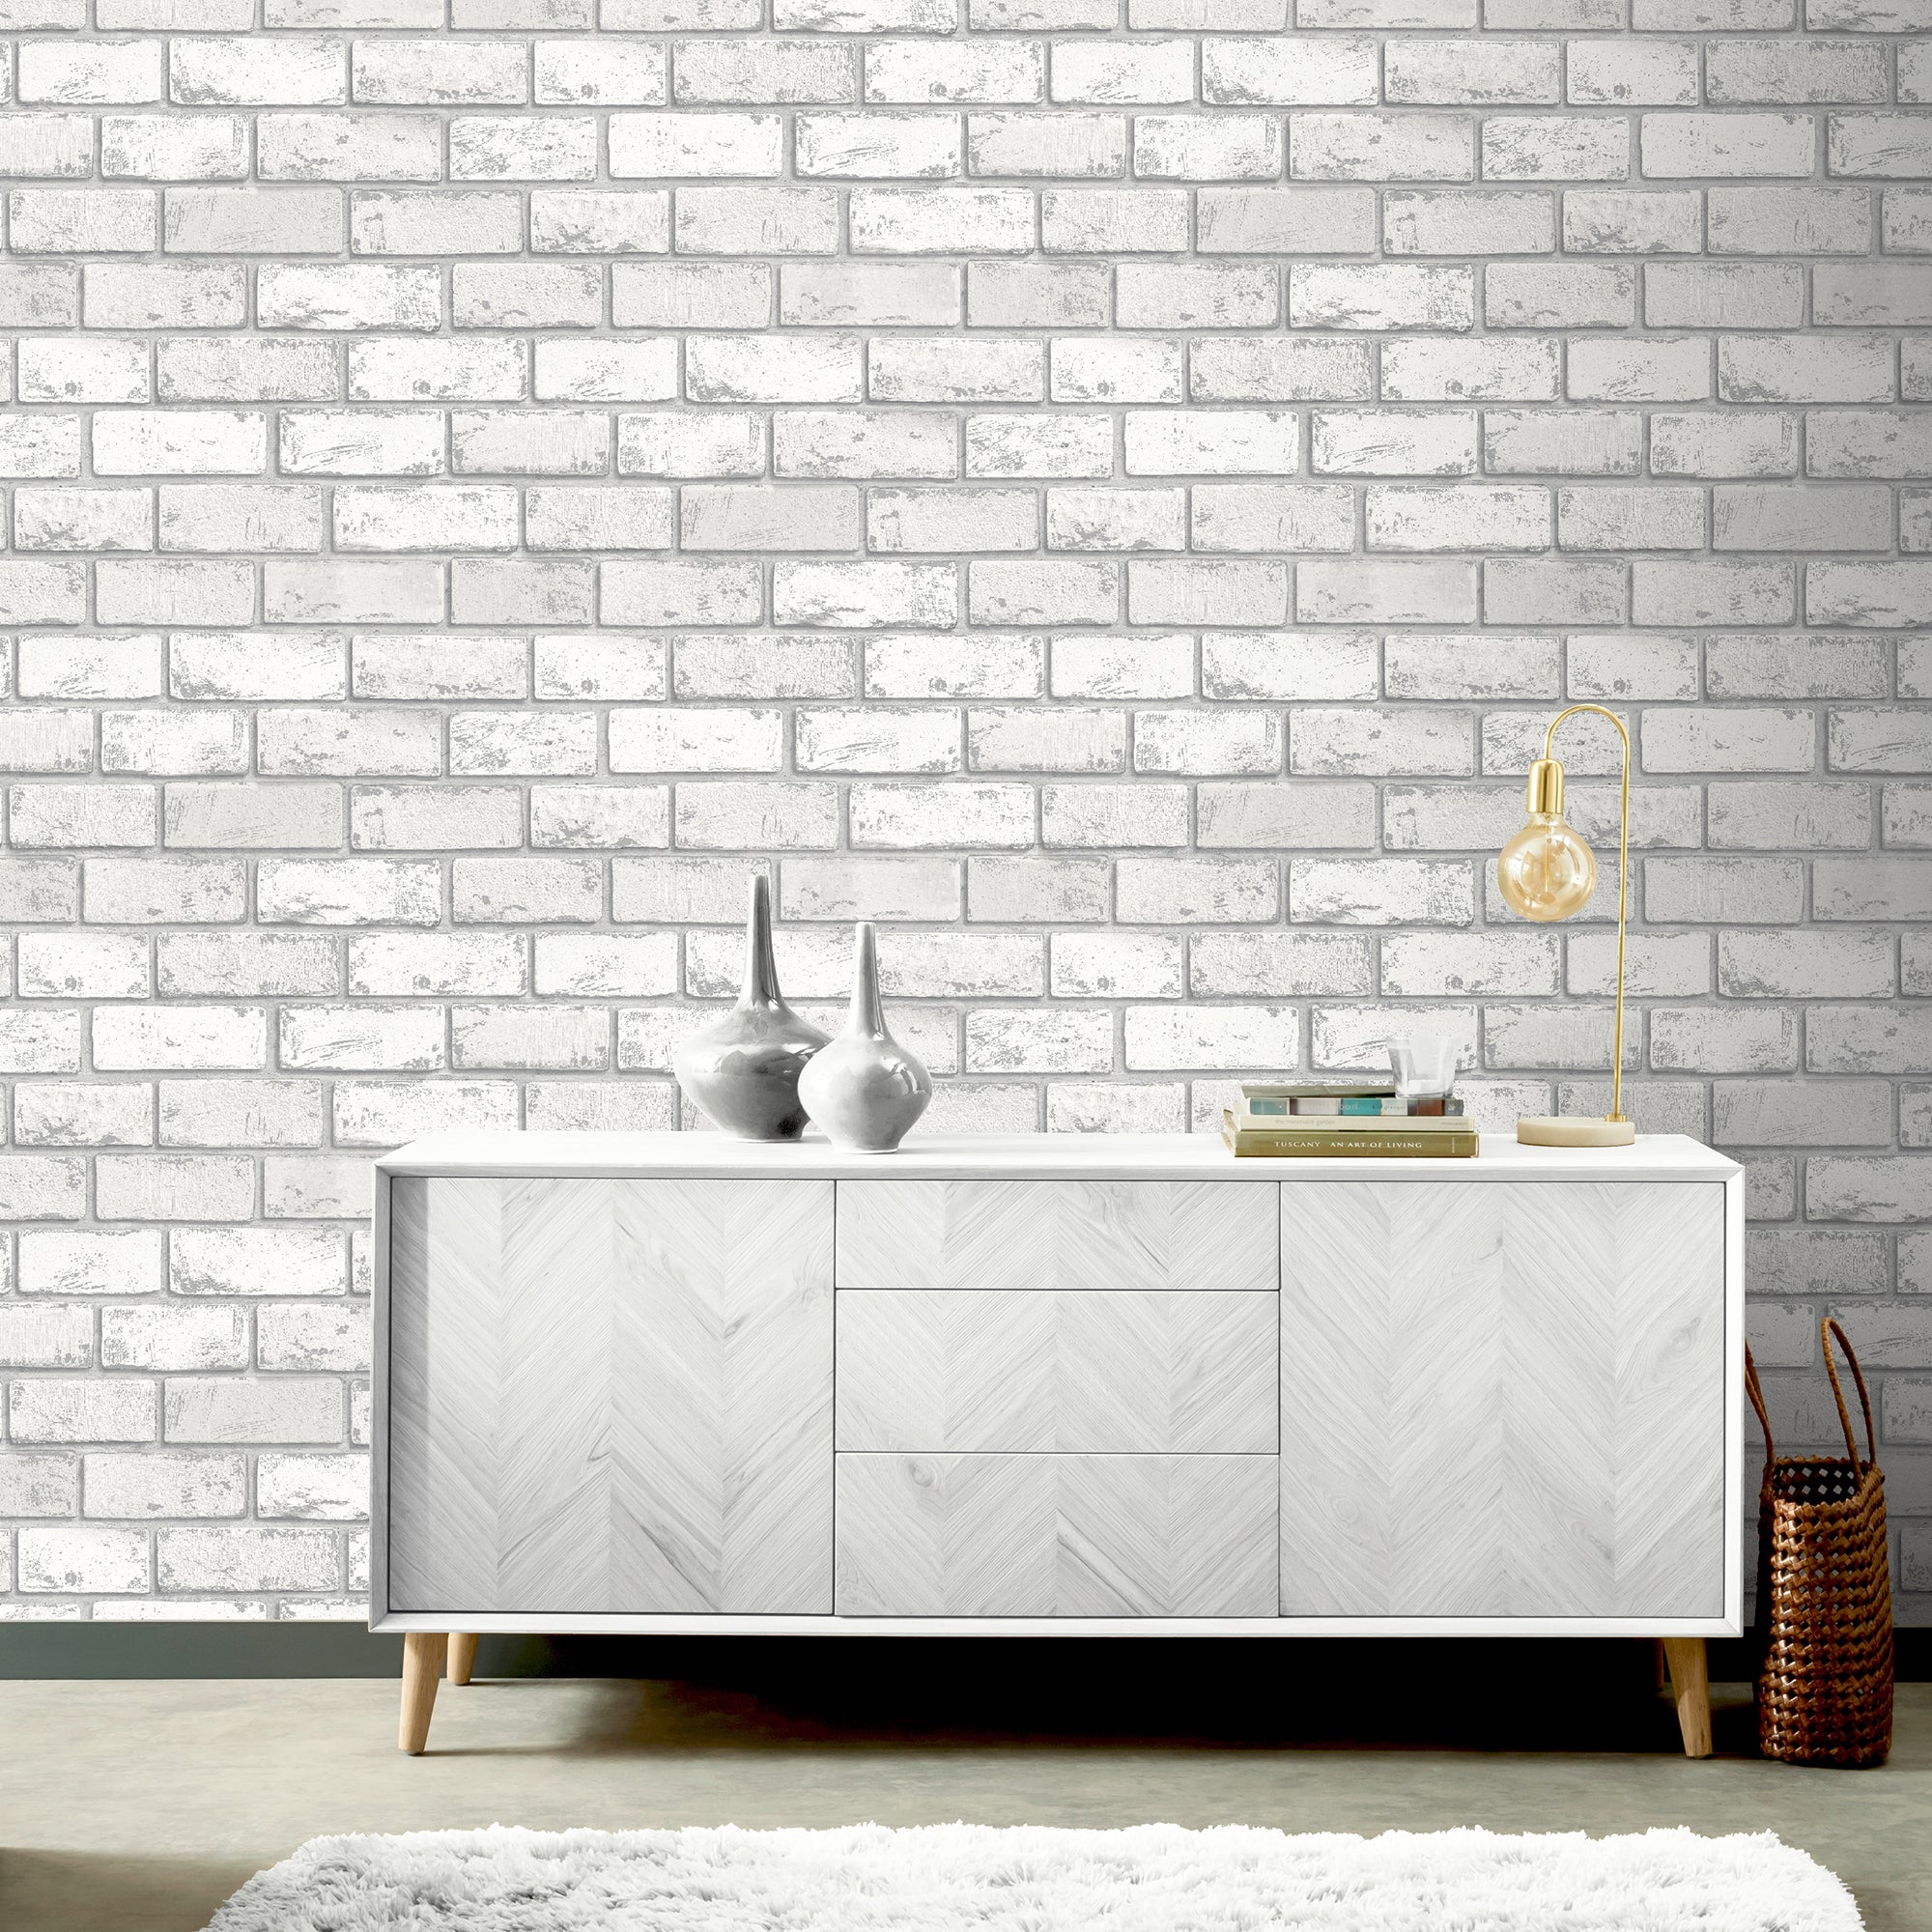 Metallic Brick White & Silver Wallpaper